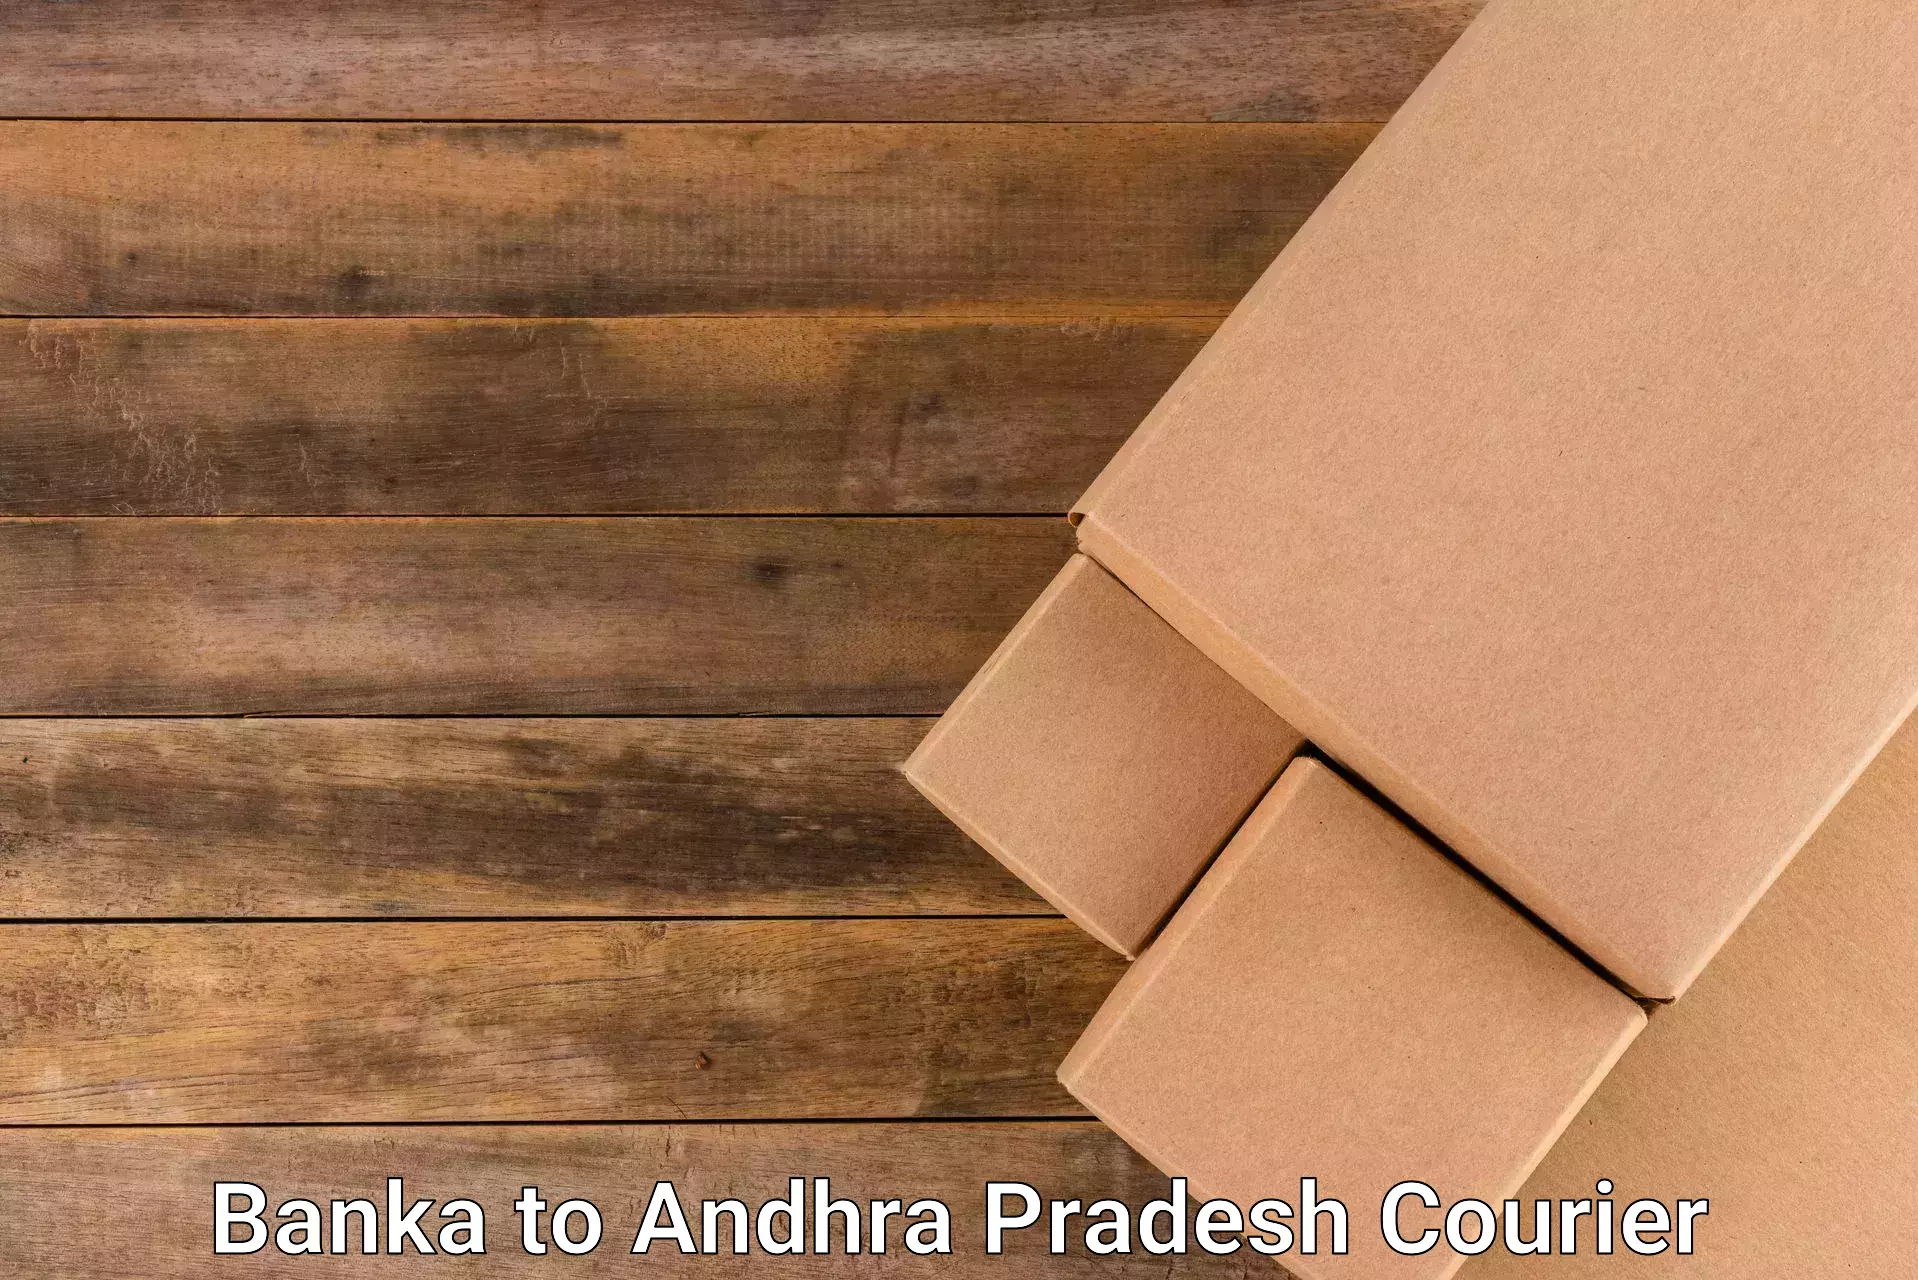 Logistics service provider Banka to Andhra Pradesh